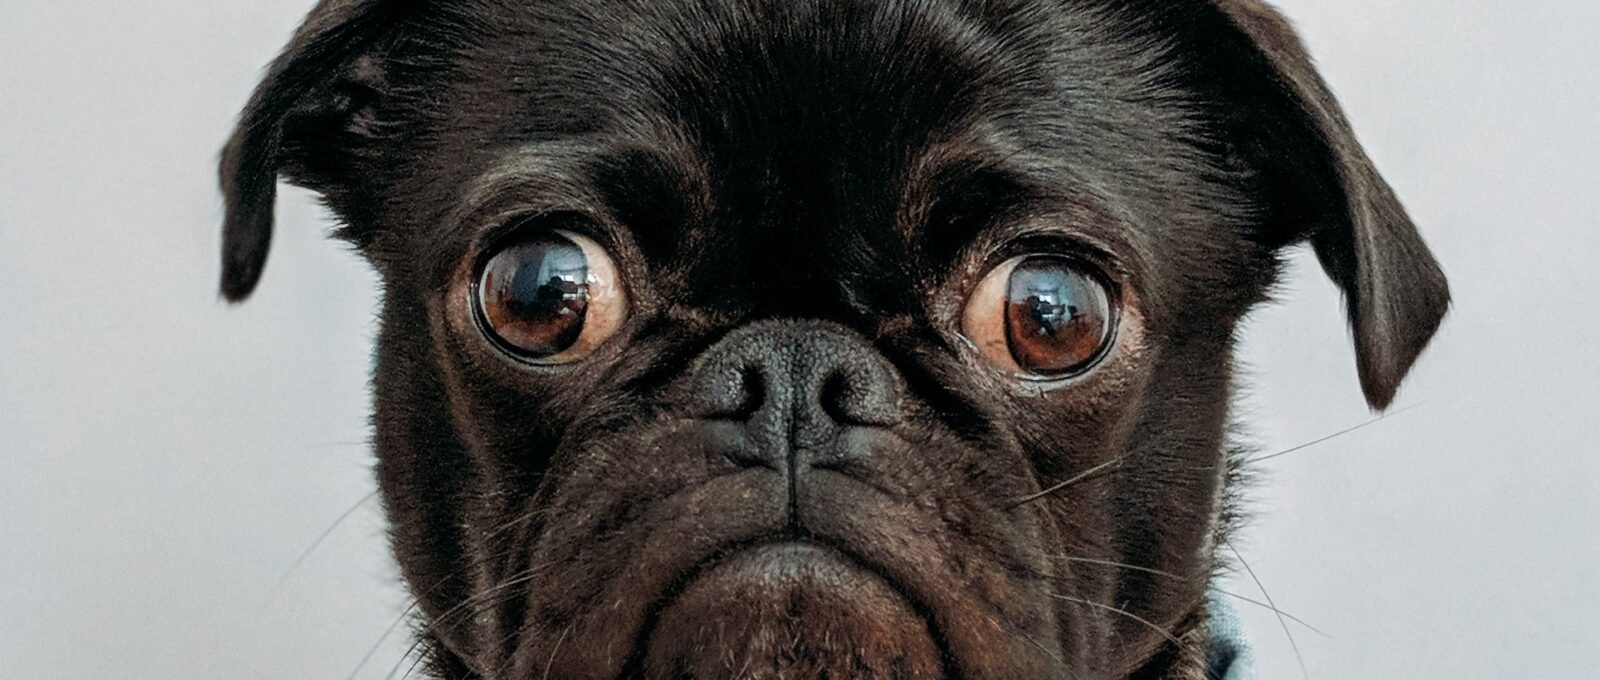 pug dog with big eyes